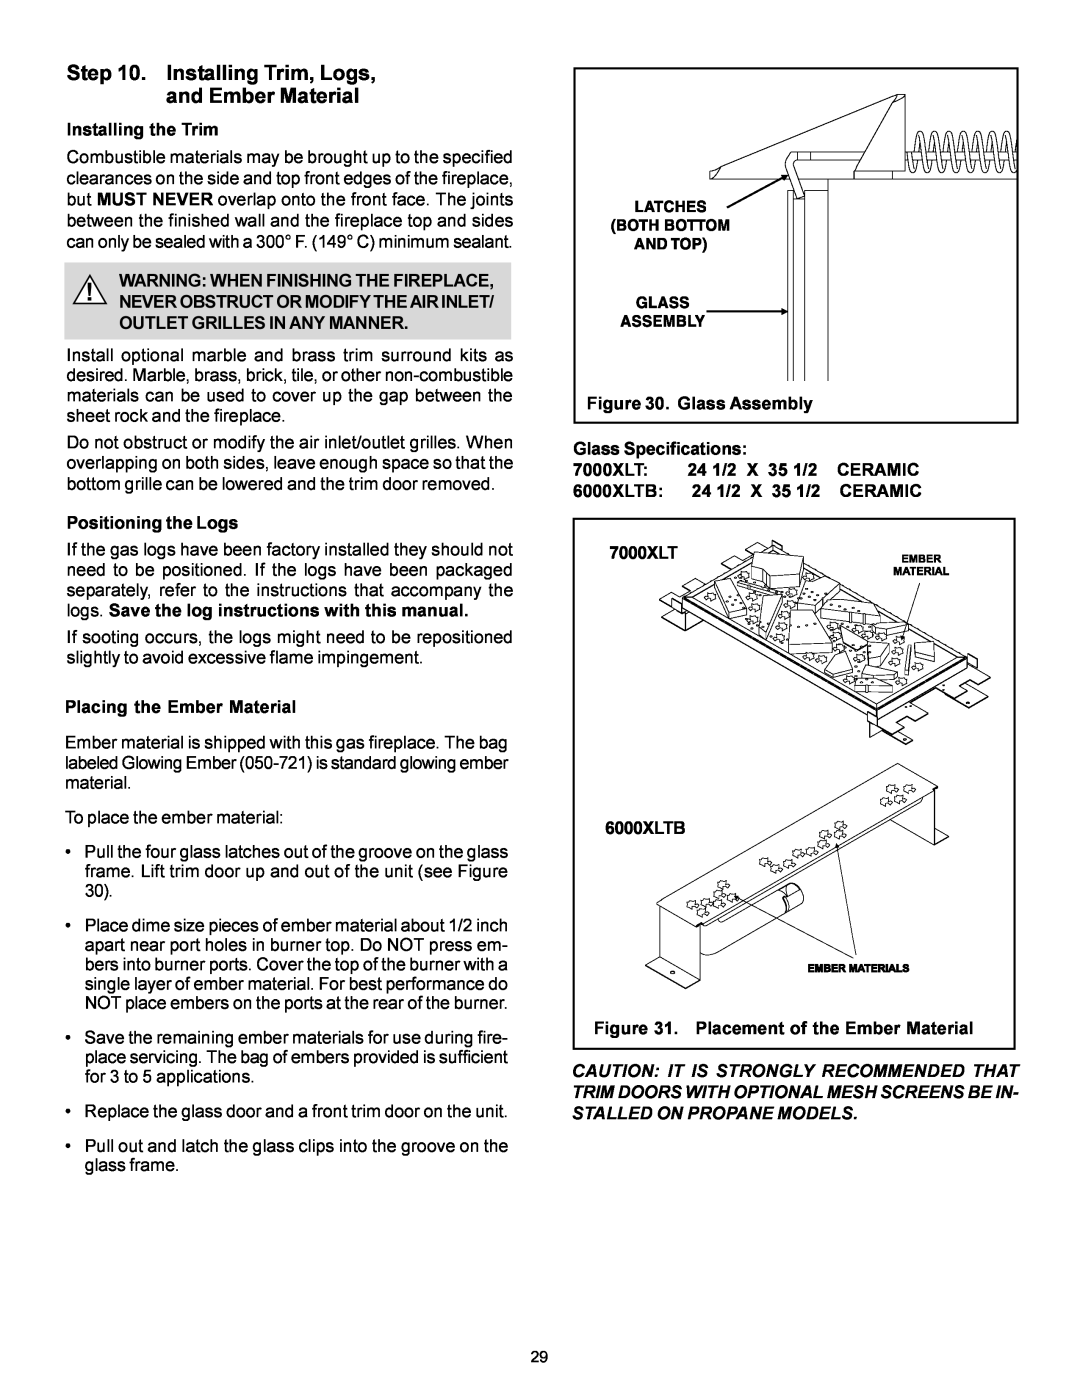 Heat & Glo LifeStyle 7000XLT manual Installing the Trim 